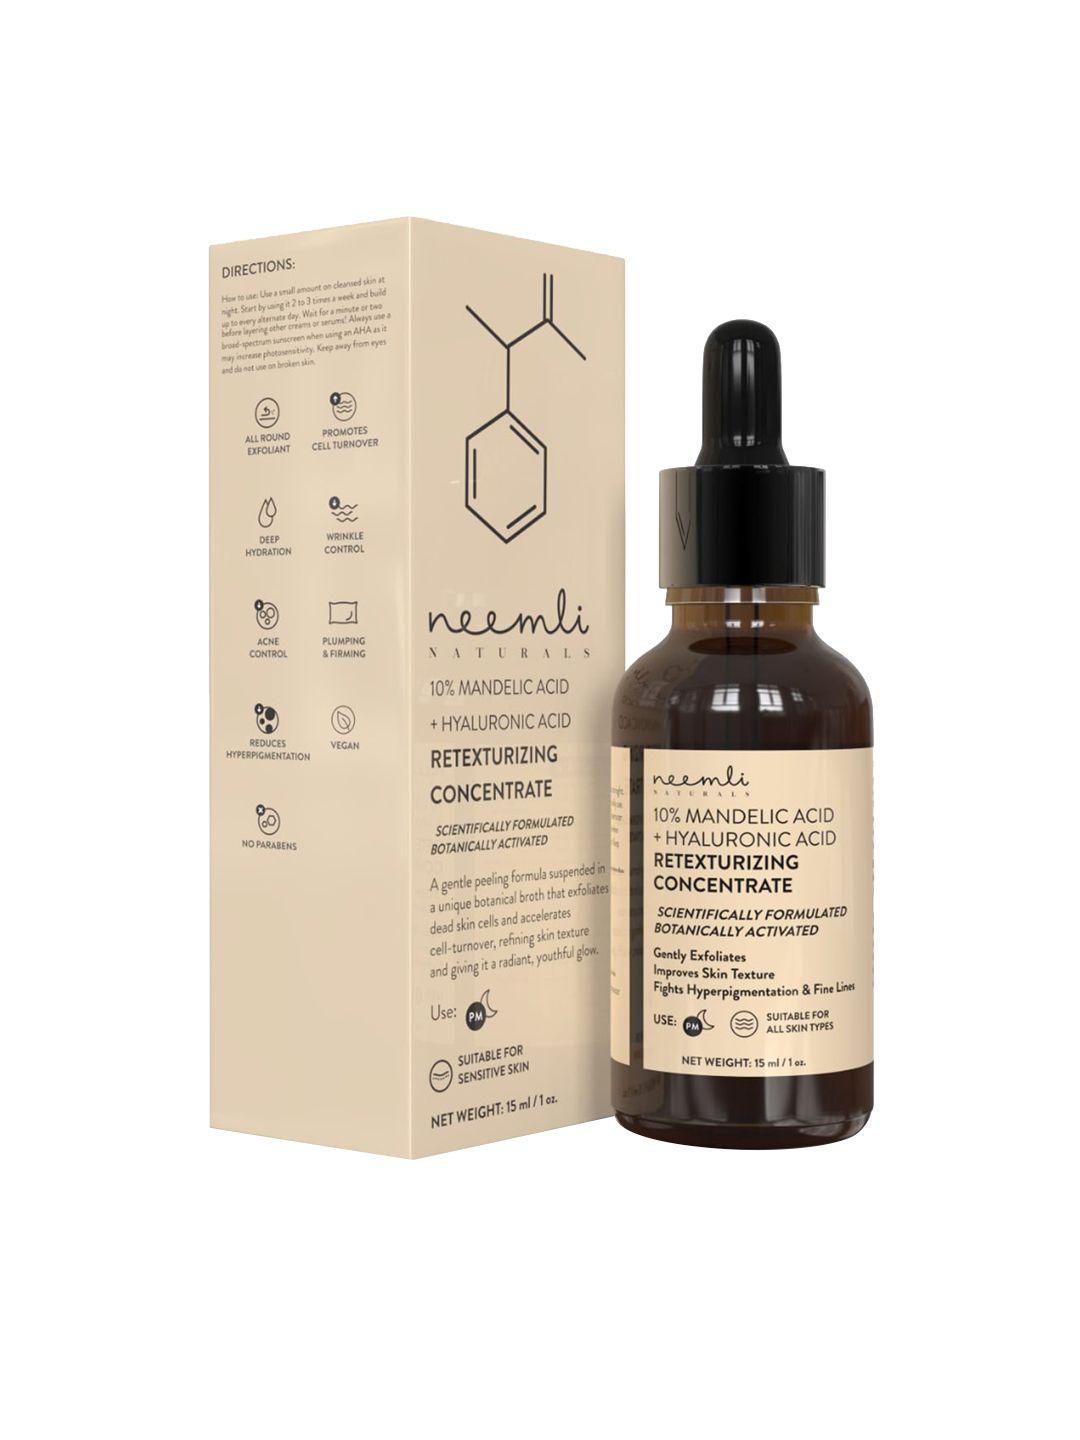 neemli naturals mandelic acid & hyaluronic acid retexturizing concentrate vegan face serum